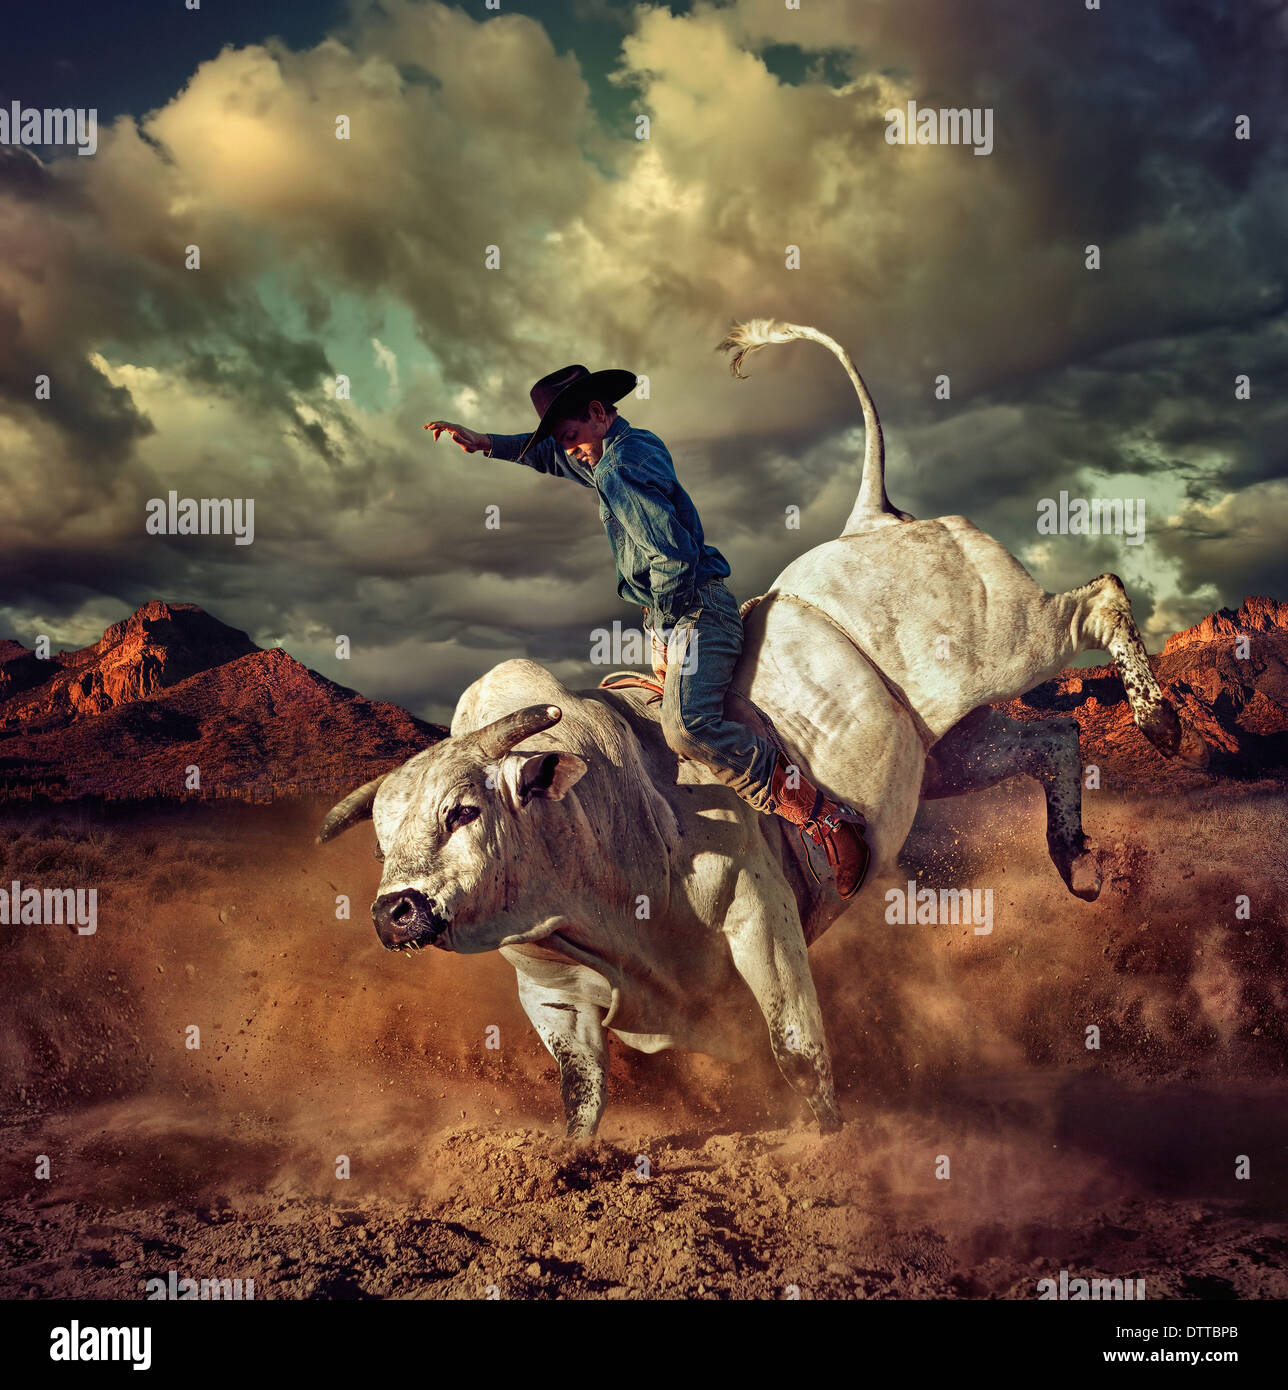 Caucasian cowboy riding bucking bull in desert Stock Photo